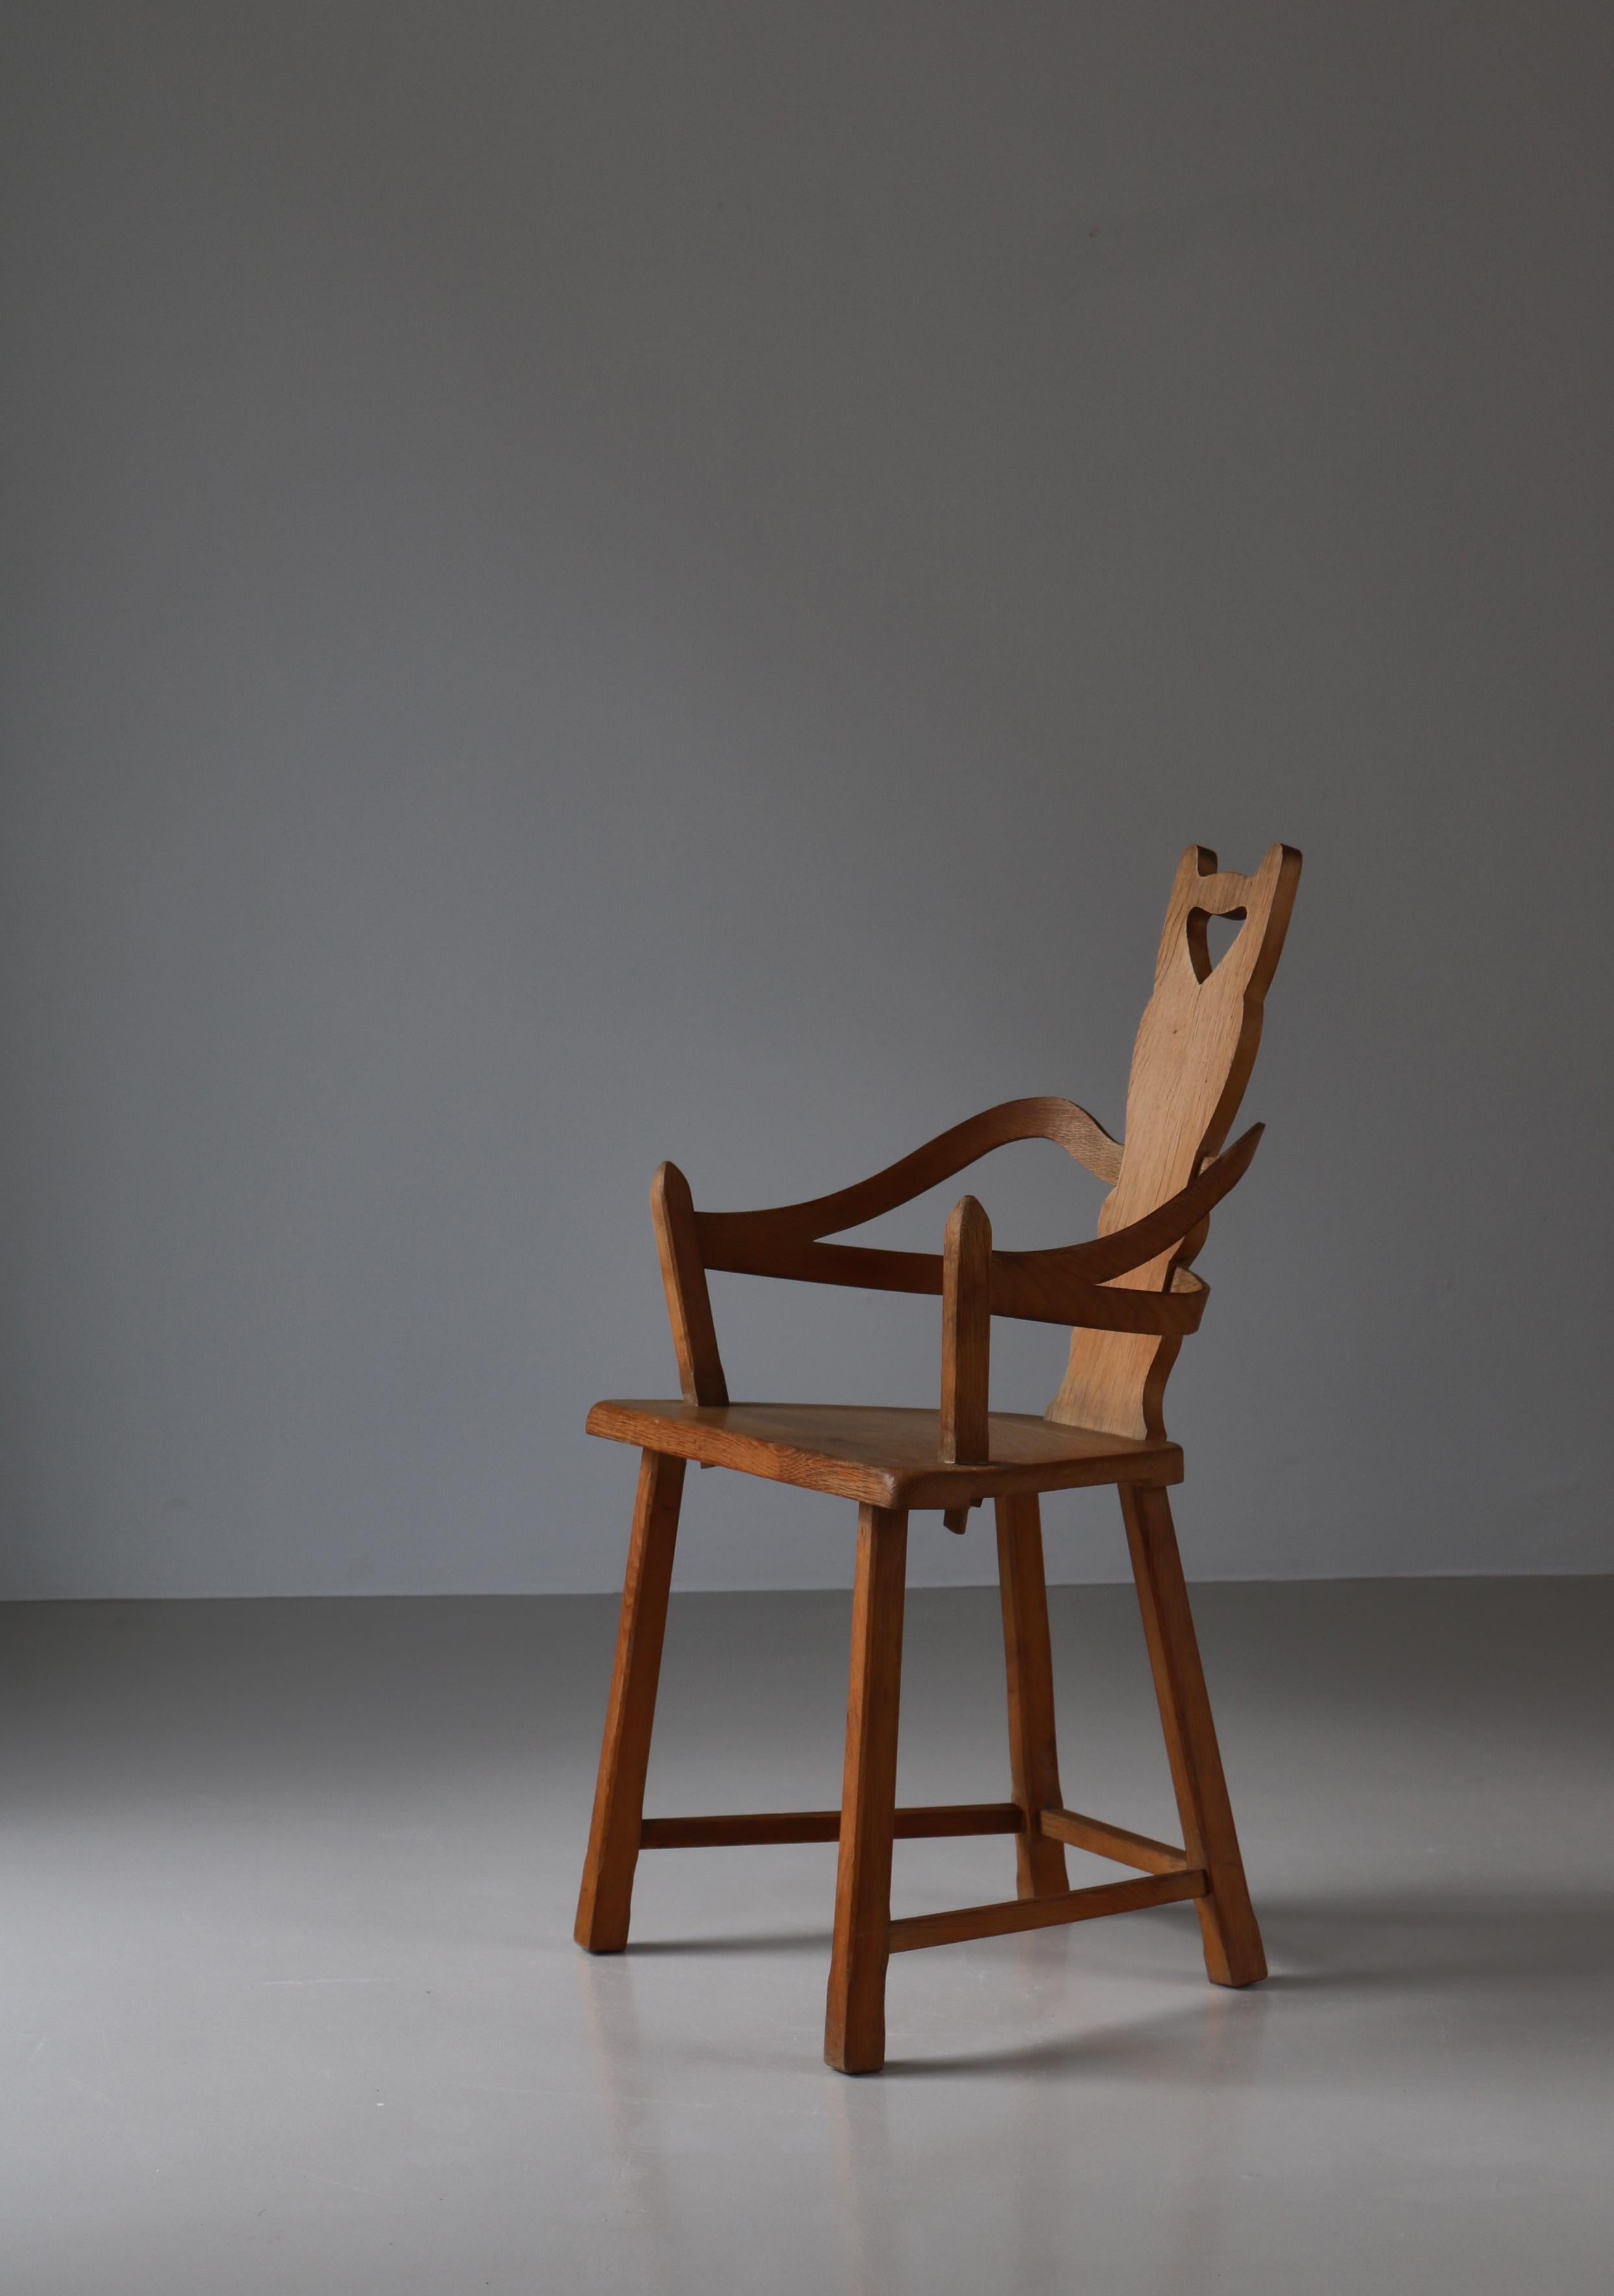 Swedish Folk Art Chair Handmade in Oakwood, 1900s For Sale 2